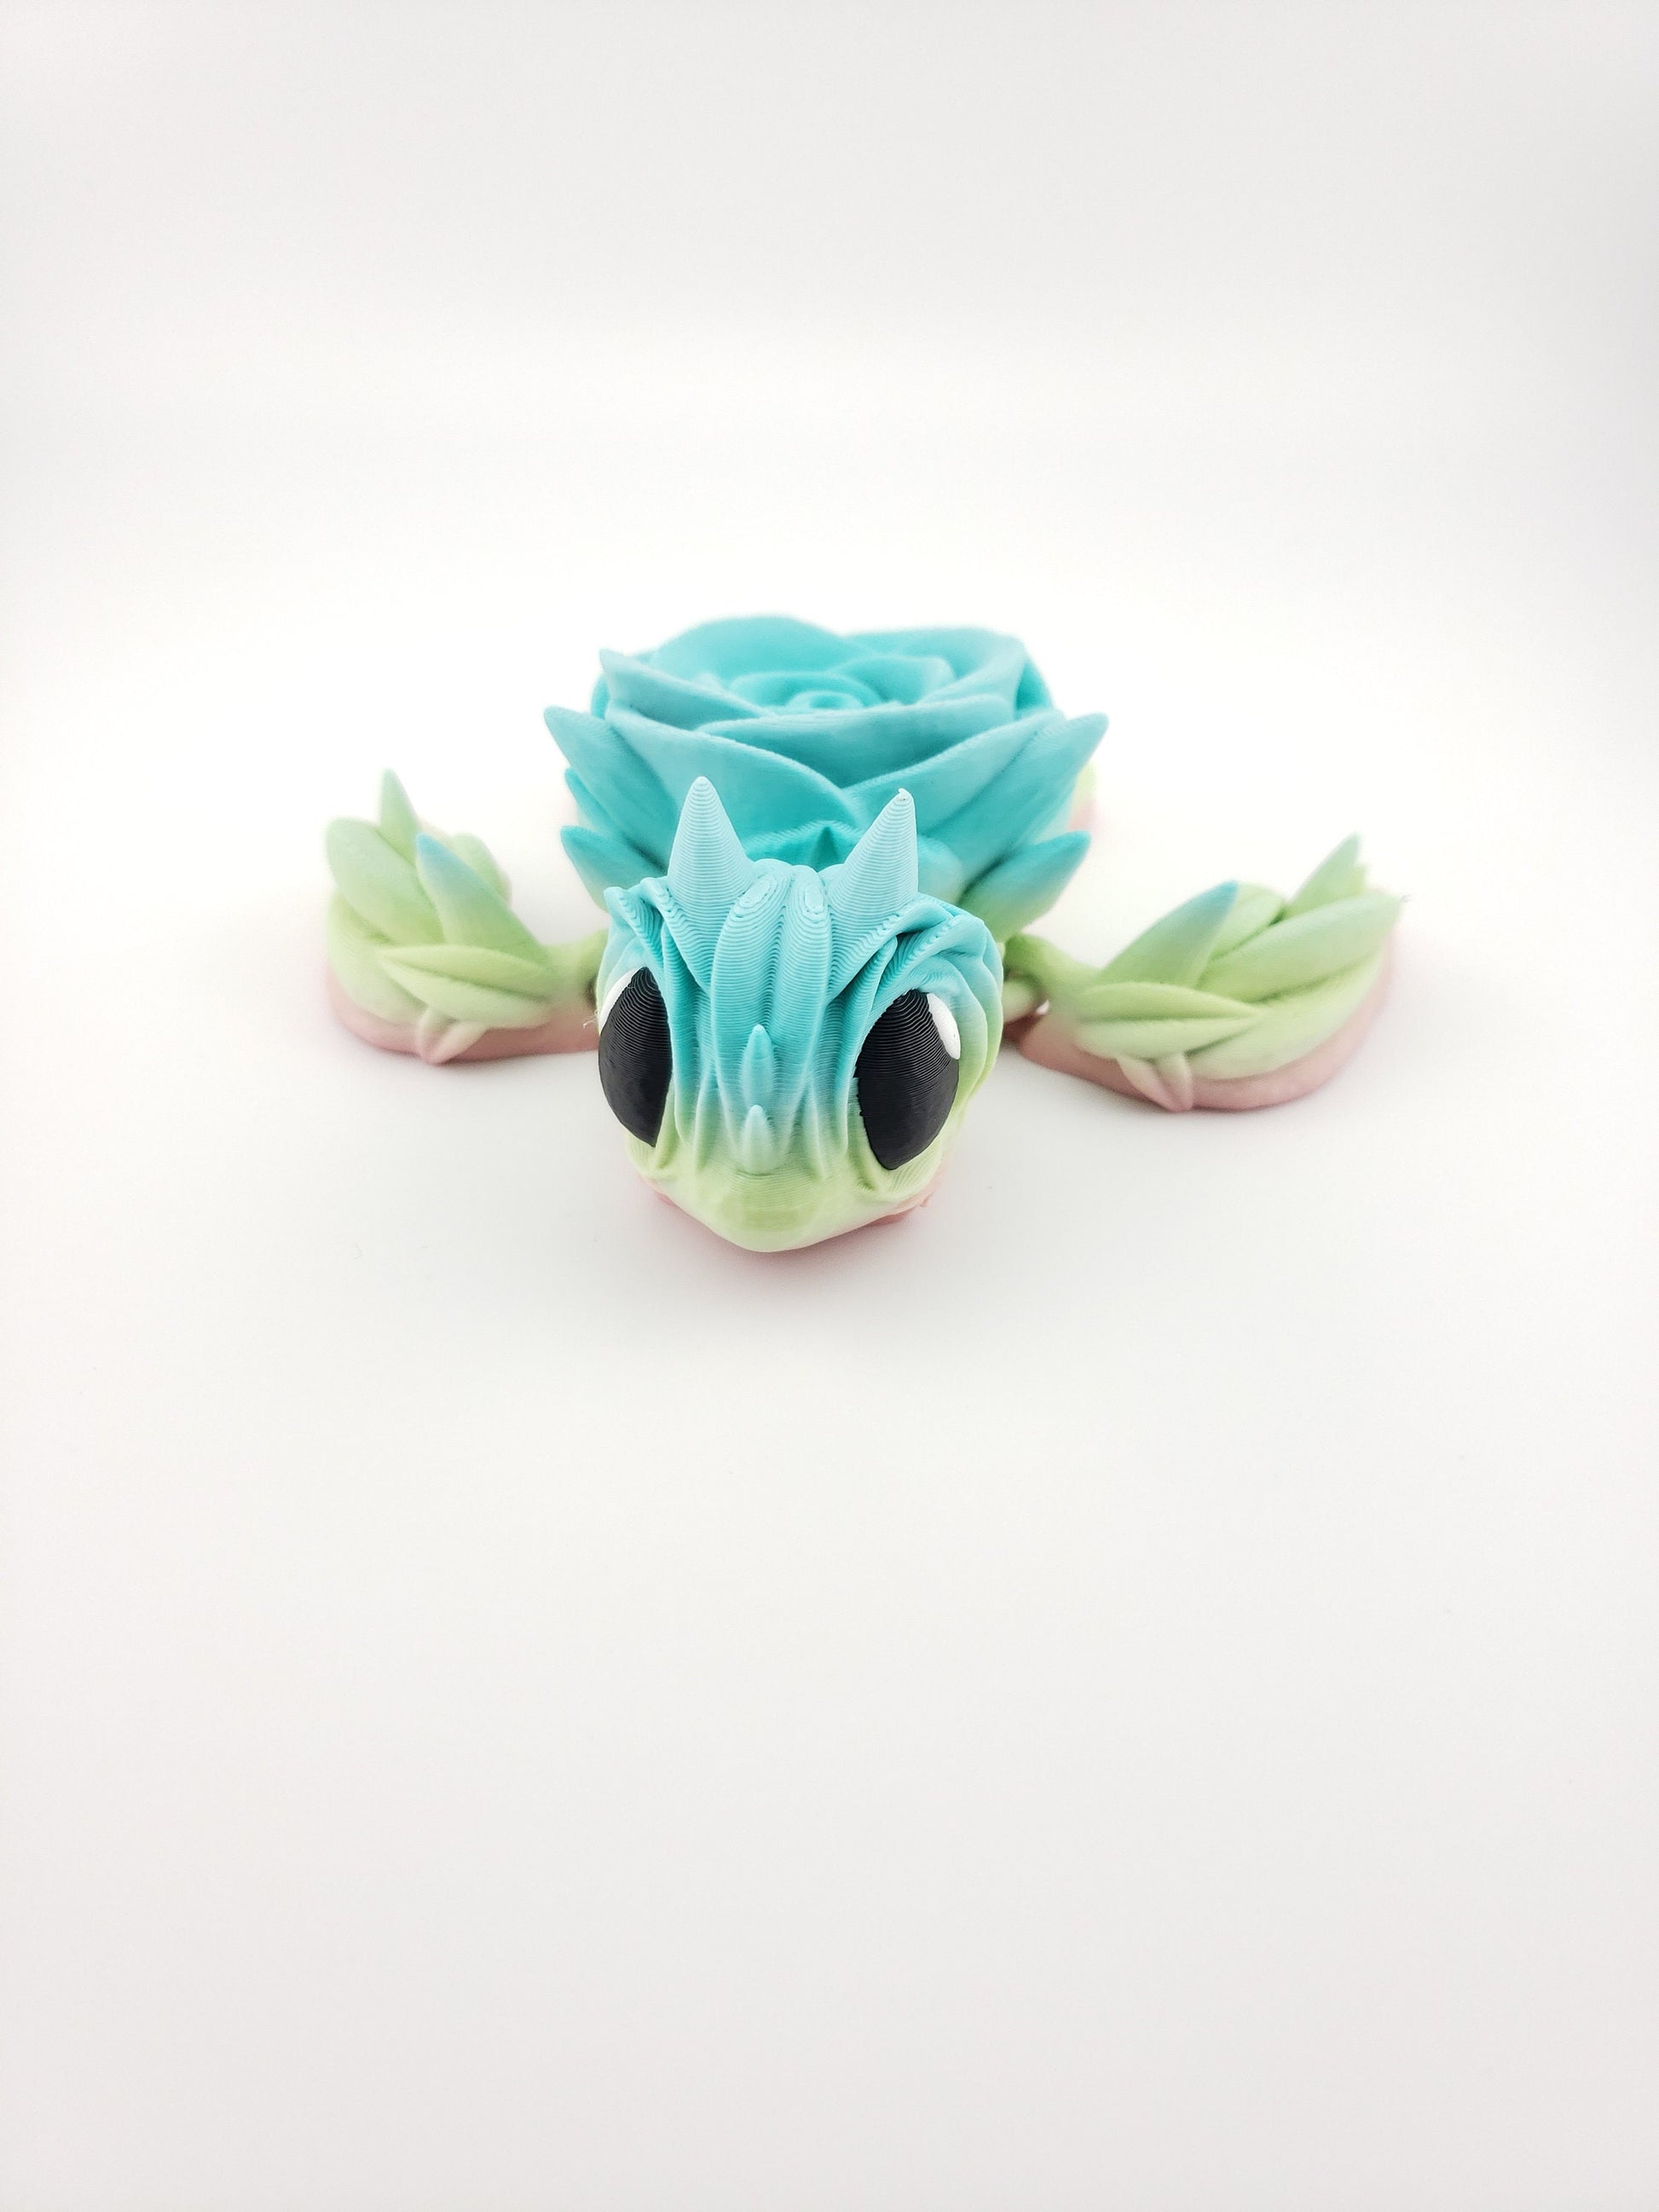 3D-Printed Articulated Rose Turtle Decor Desk Decor Fidget Toy - Animal Figurine - Authorized Seller